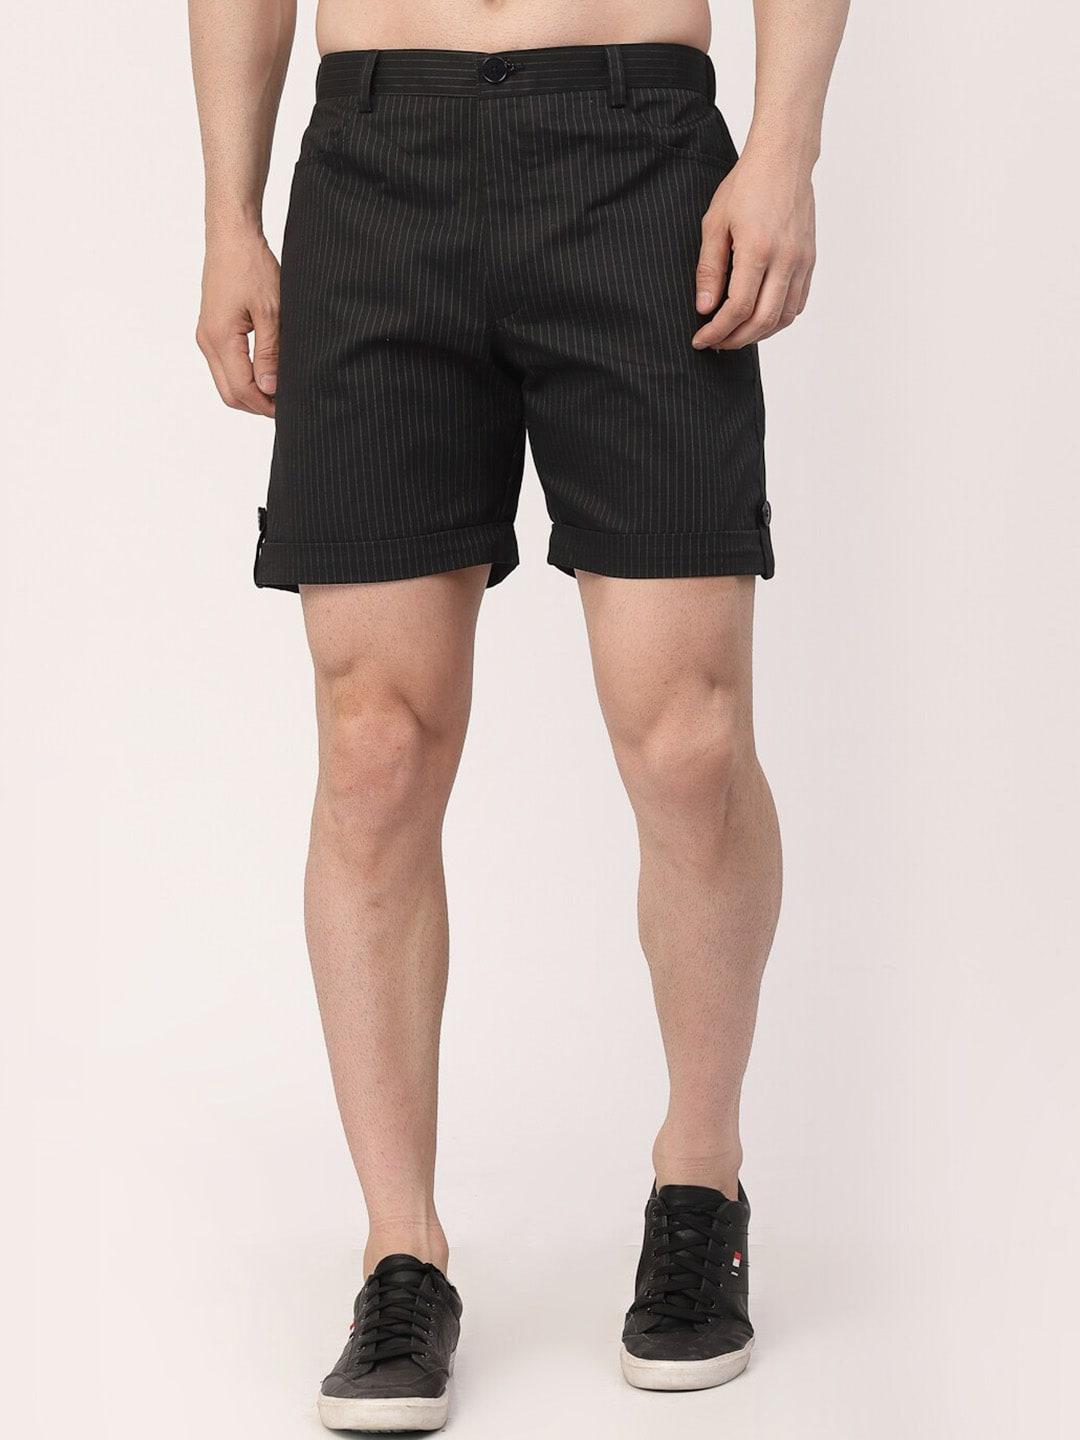 klotthe-men-striped-mid-rise-rapid-dry-cotton-shorts